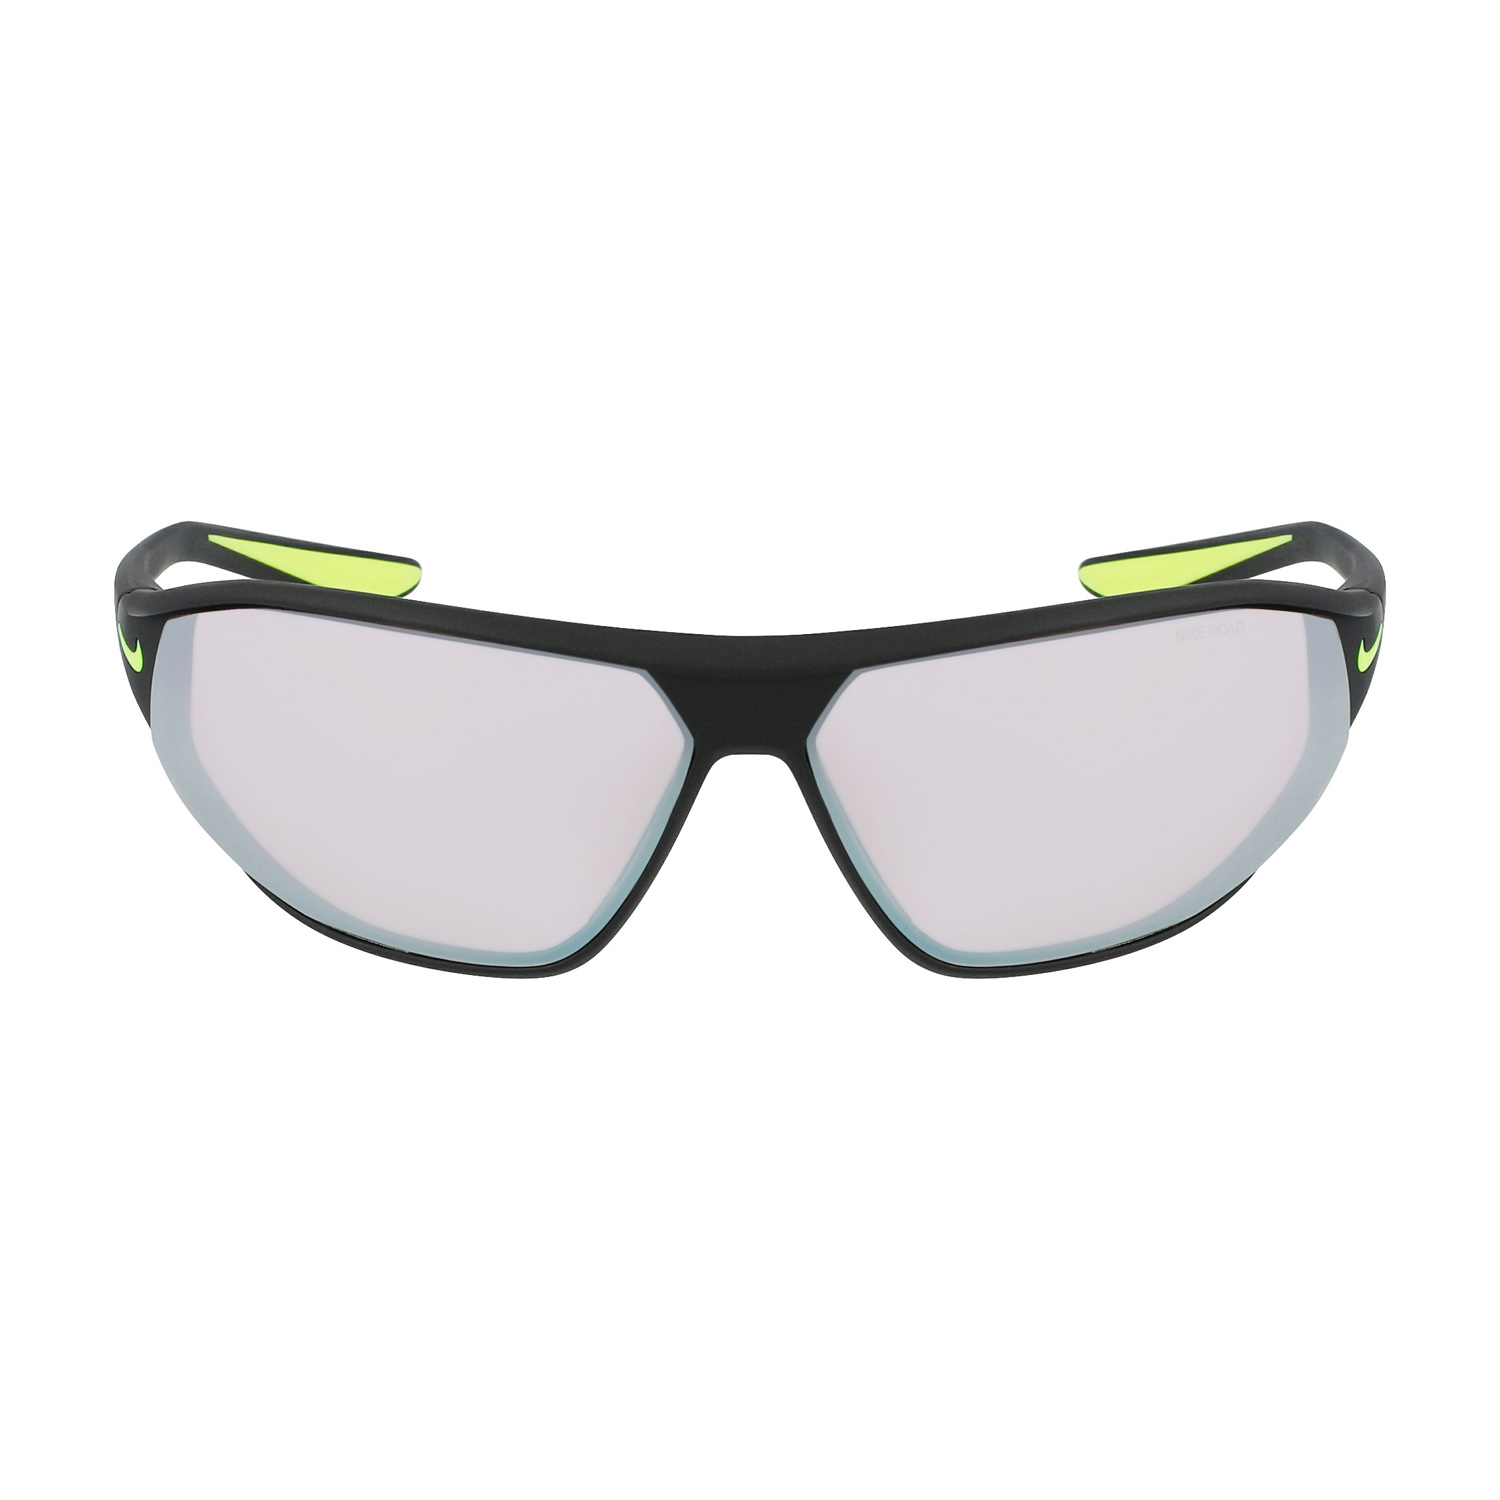 Nike Aero Swift Elite Sunglasses - Matte Black/Road/Chrome